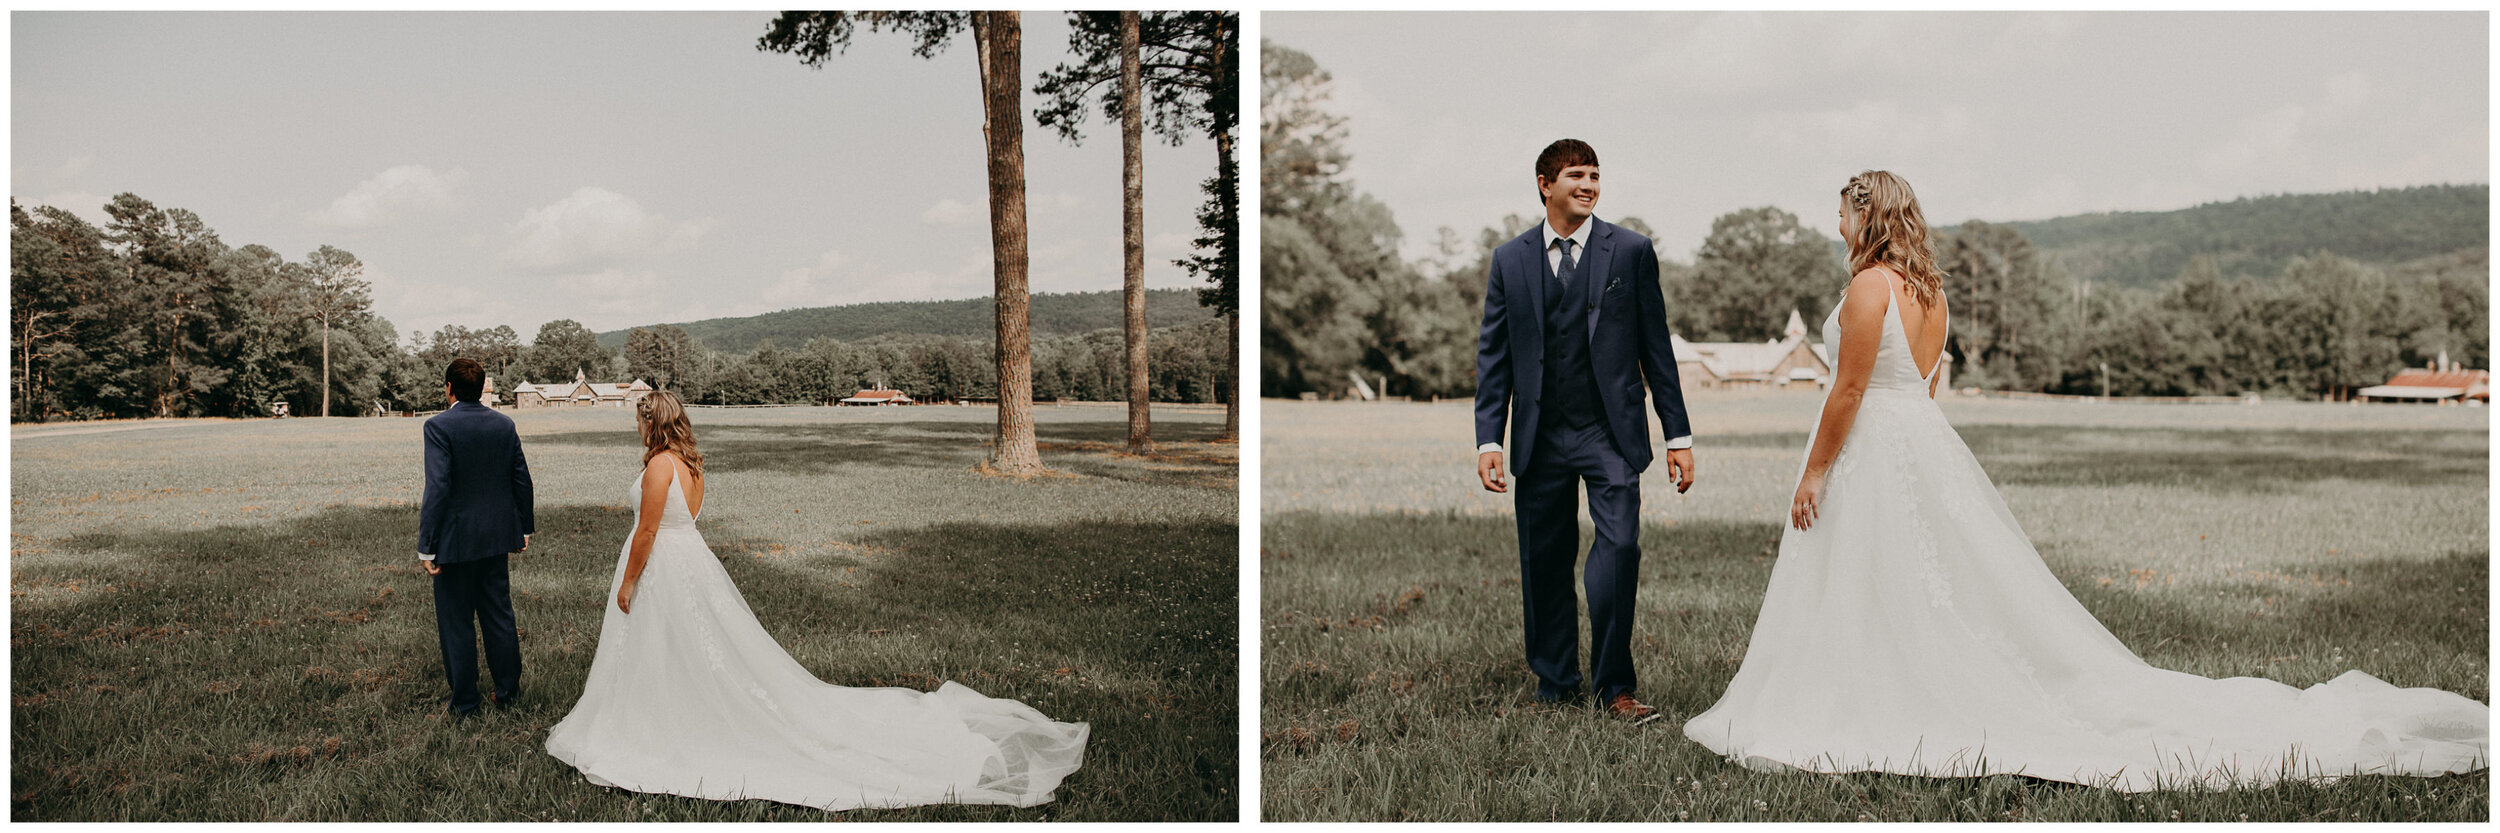 Atlanta_Wedding Day || The Farm at Rome-Ga, Aline Marin Photography36.jpg